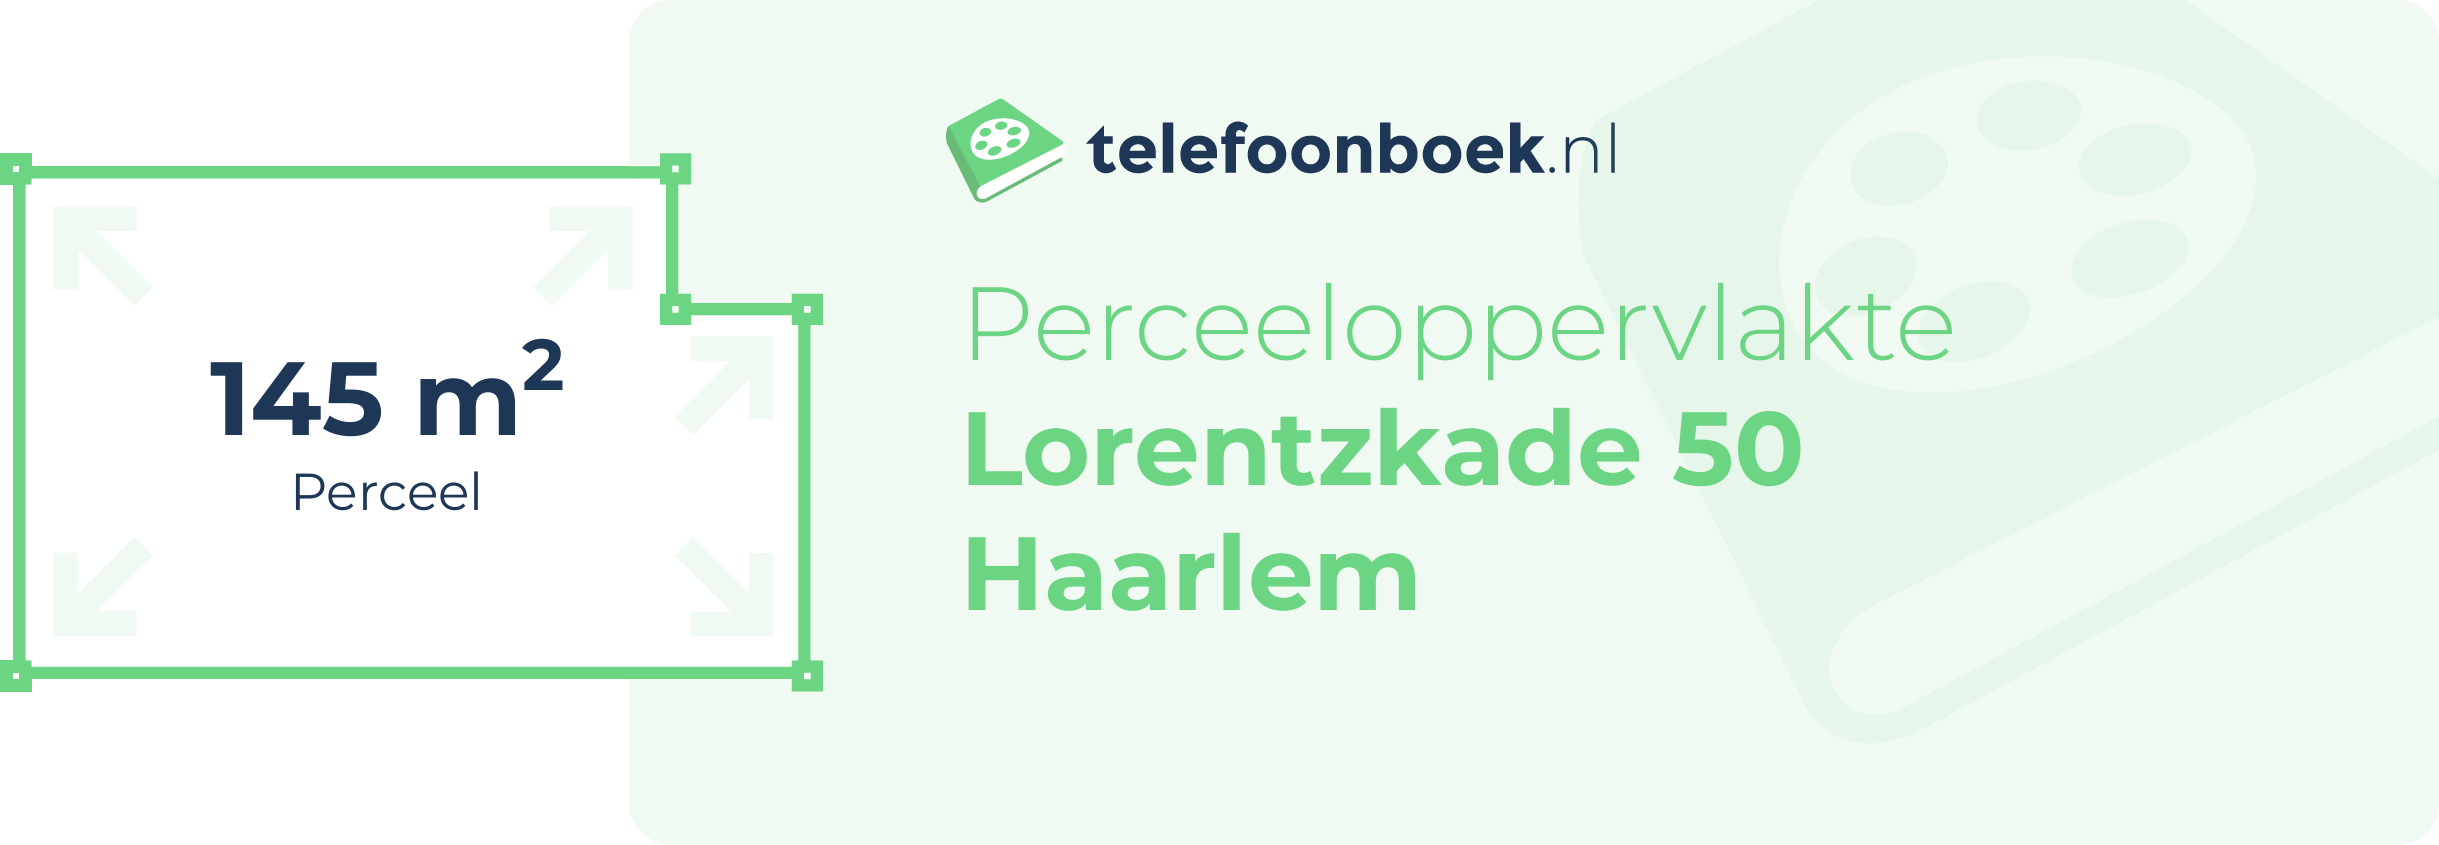 Perceeloppervlakte Lorentzkade 50 Haarlem